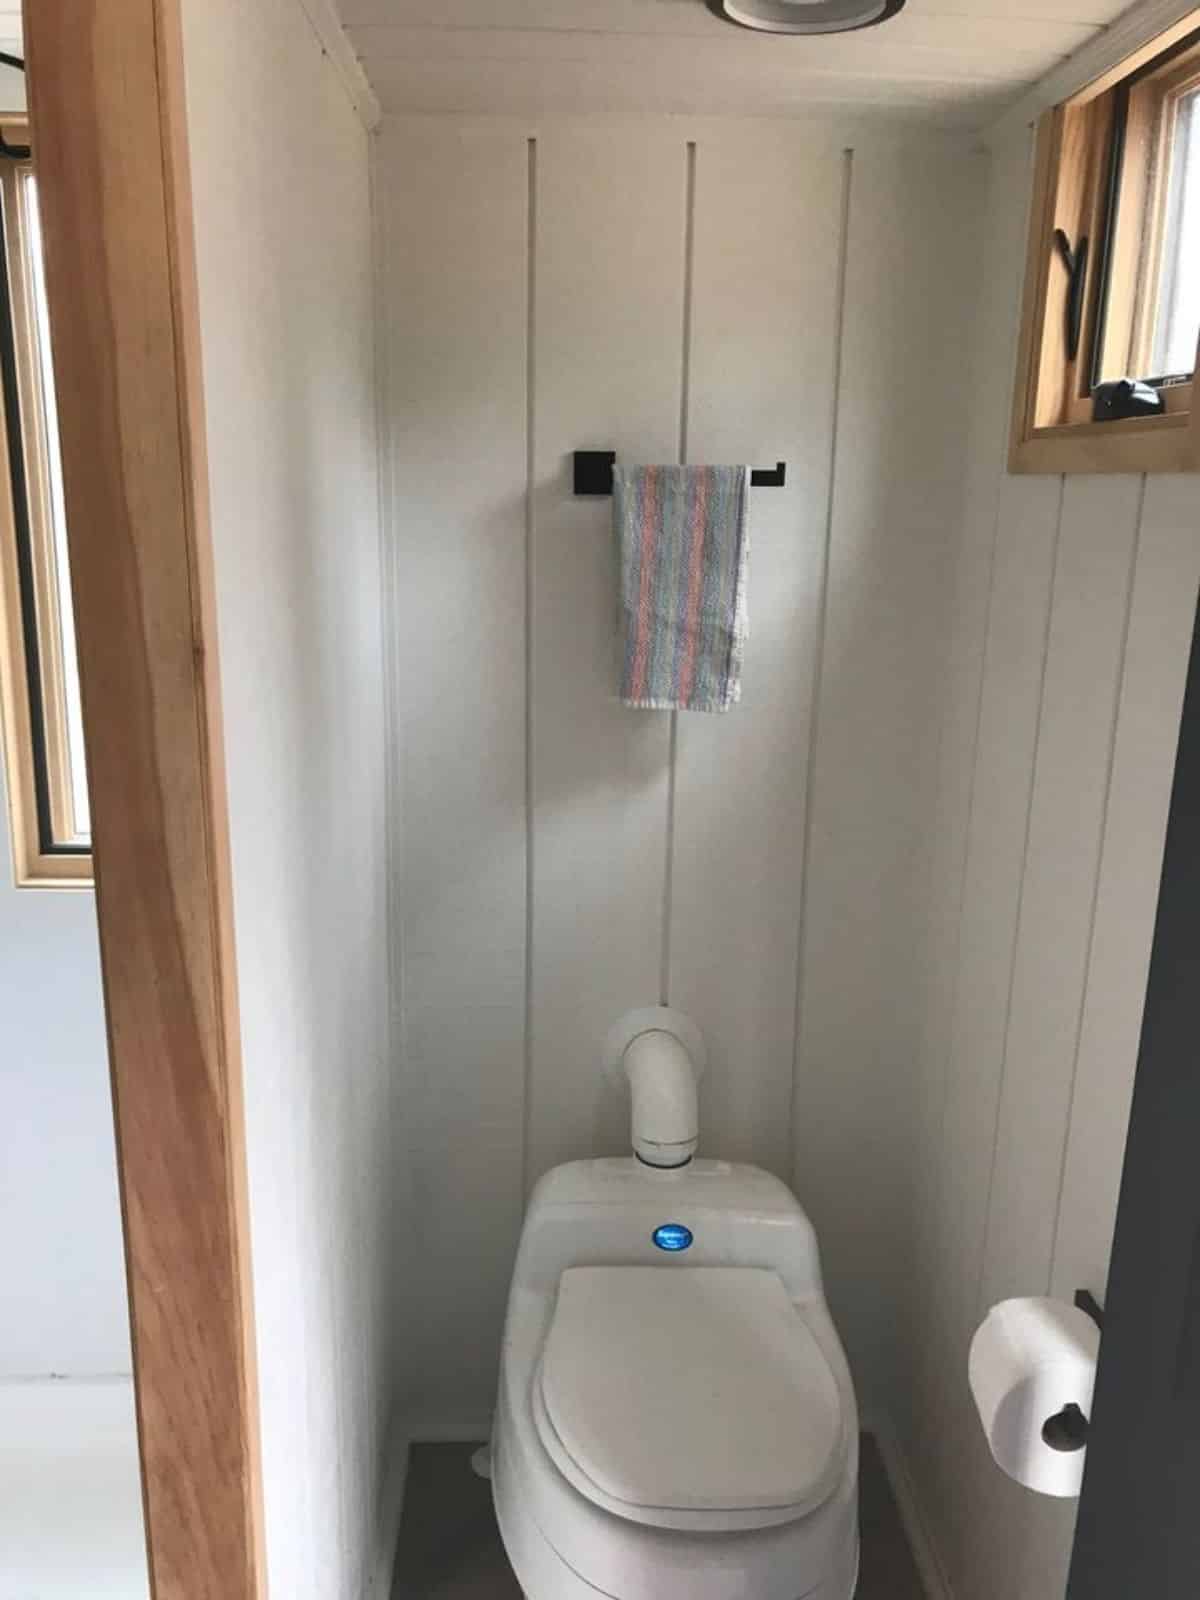 Standard toilet is installed in bathroom of 24’ Custom Built Tiny Home